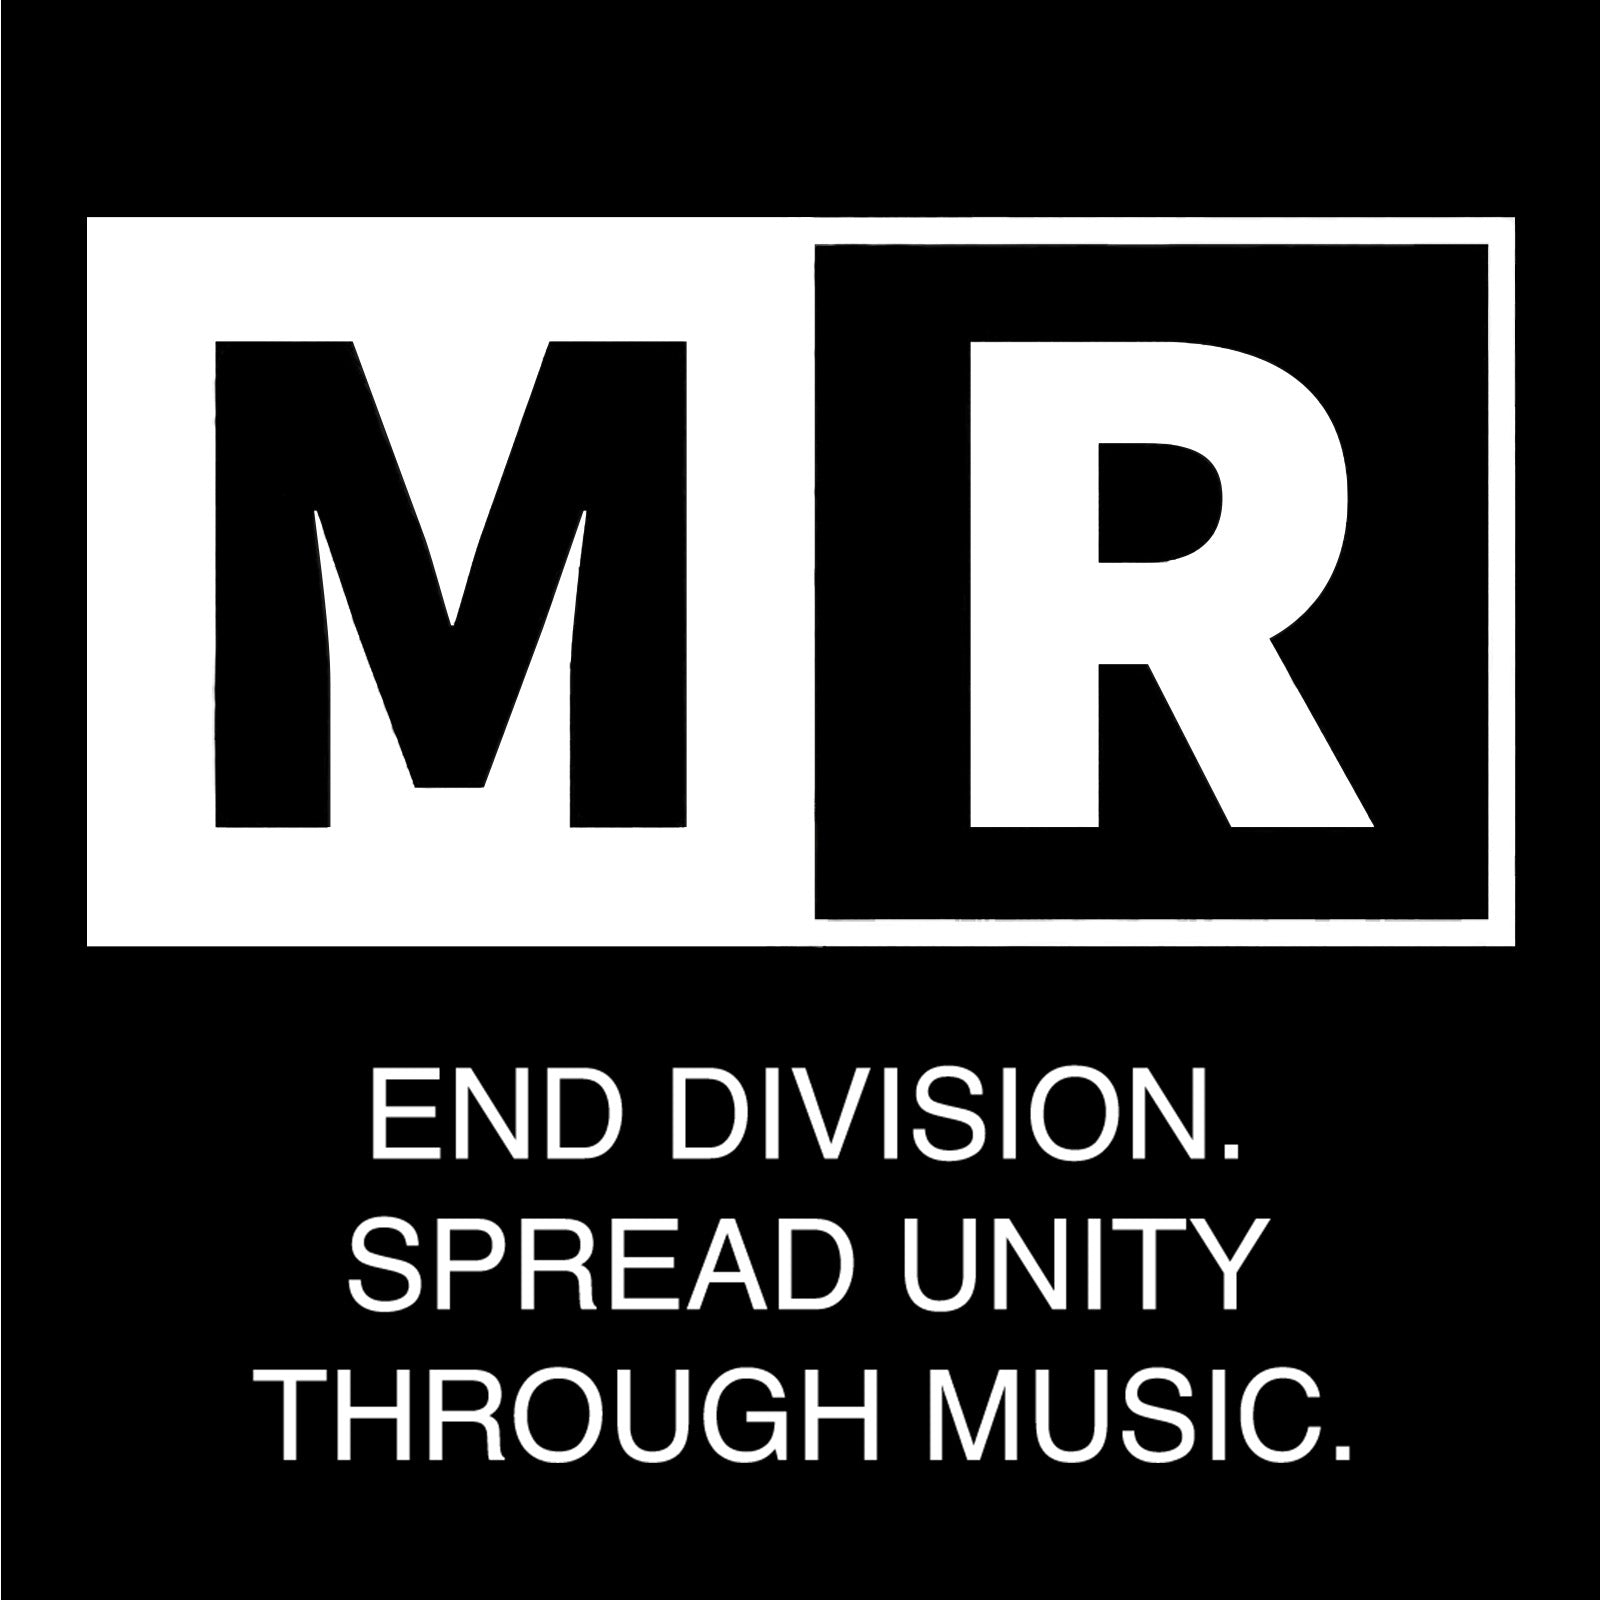 MUSREV RECORDS - aka Music Revolution